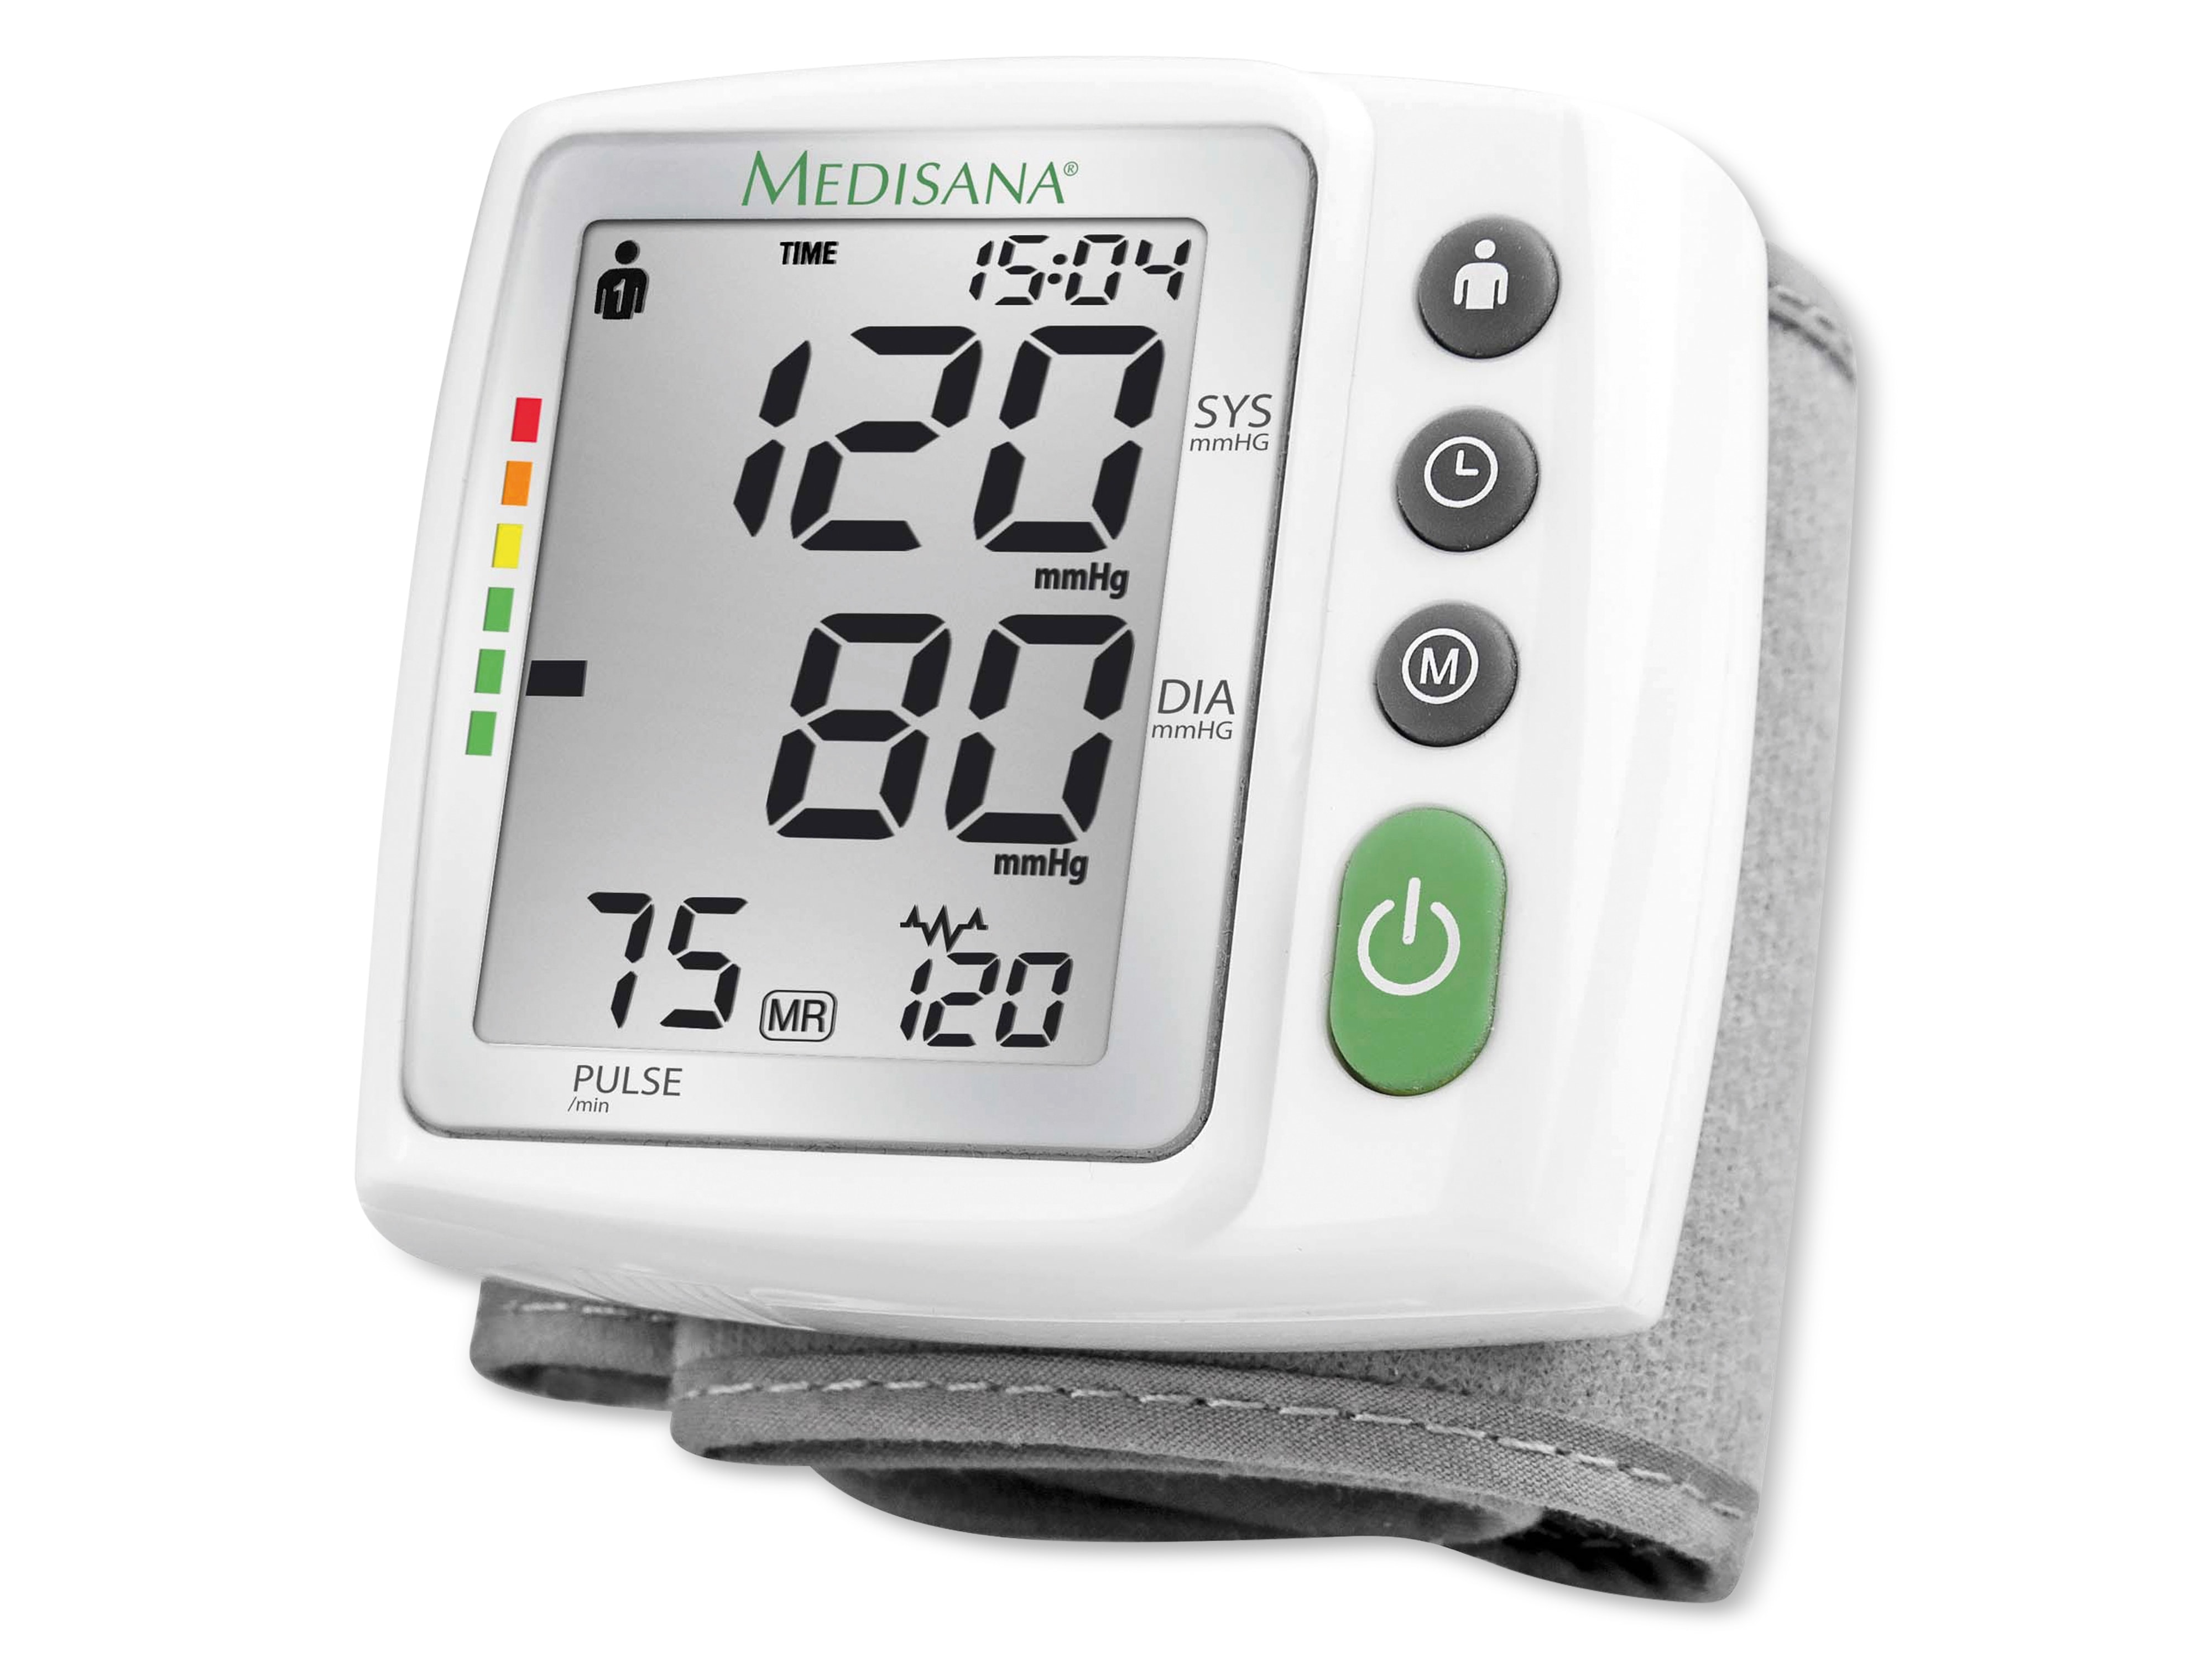 MEDISANA Blutdruckmessgerät BW 315, weiß